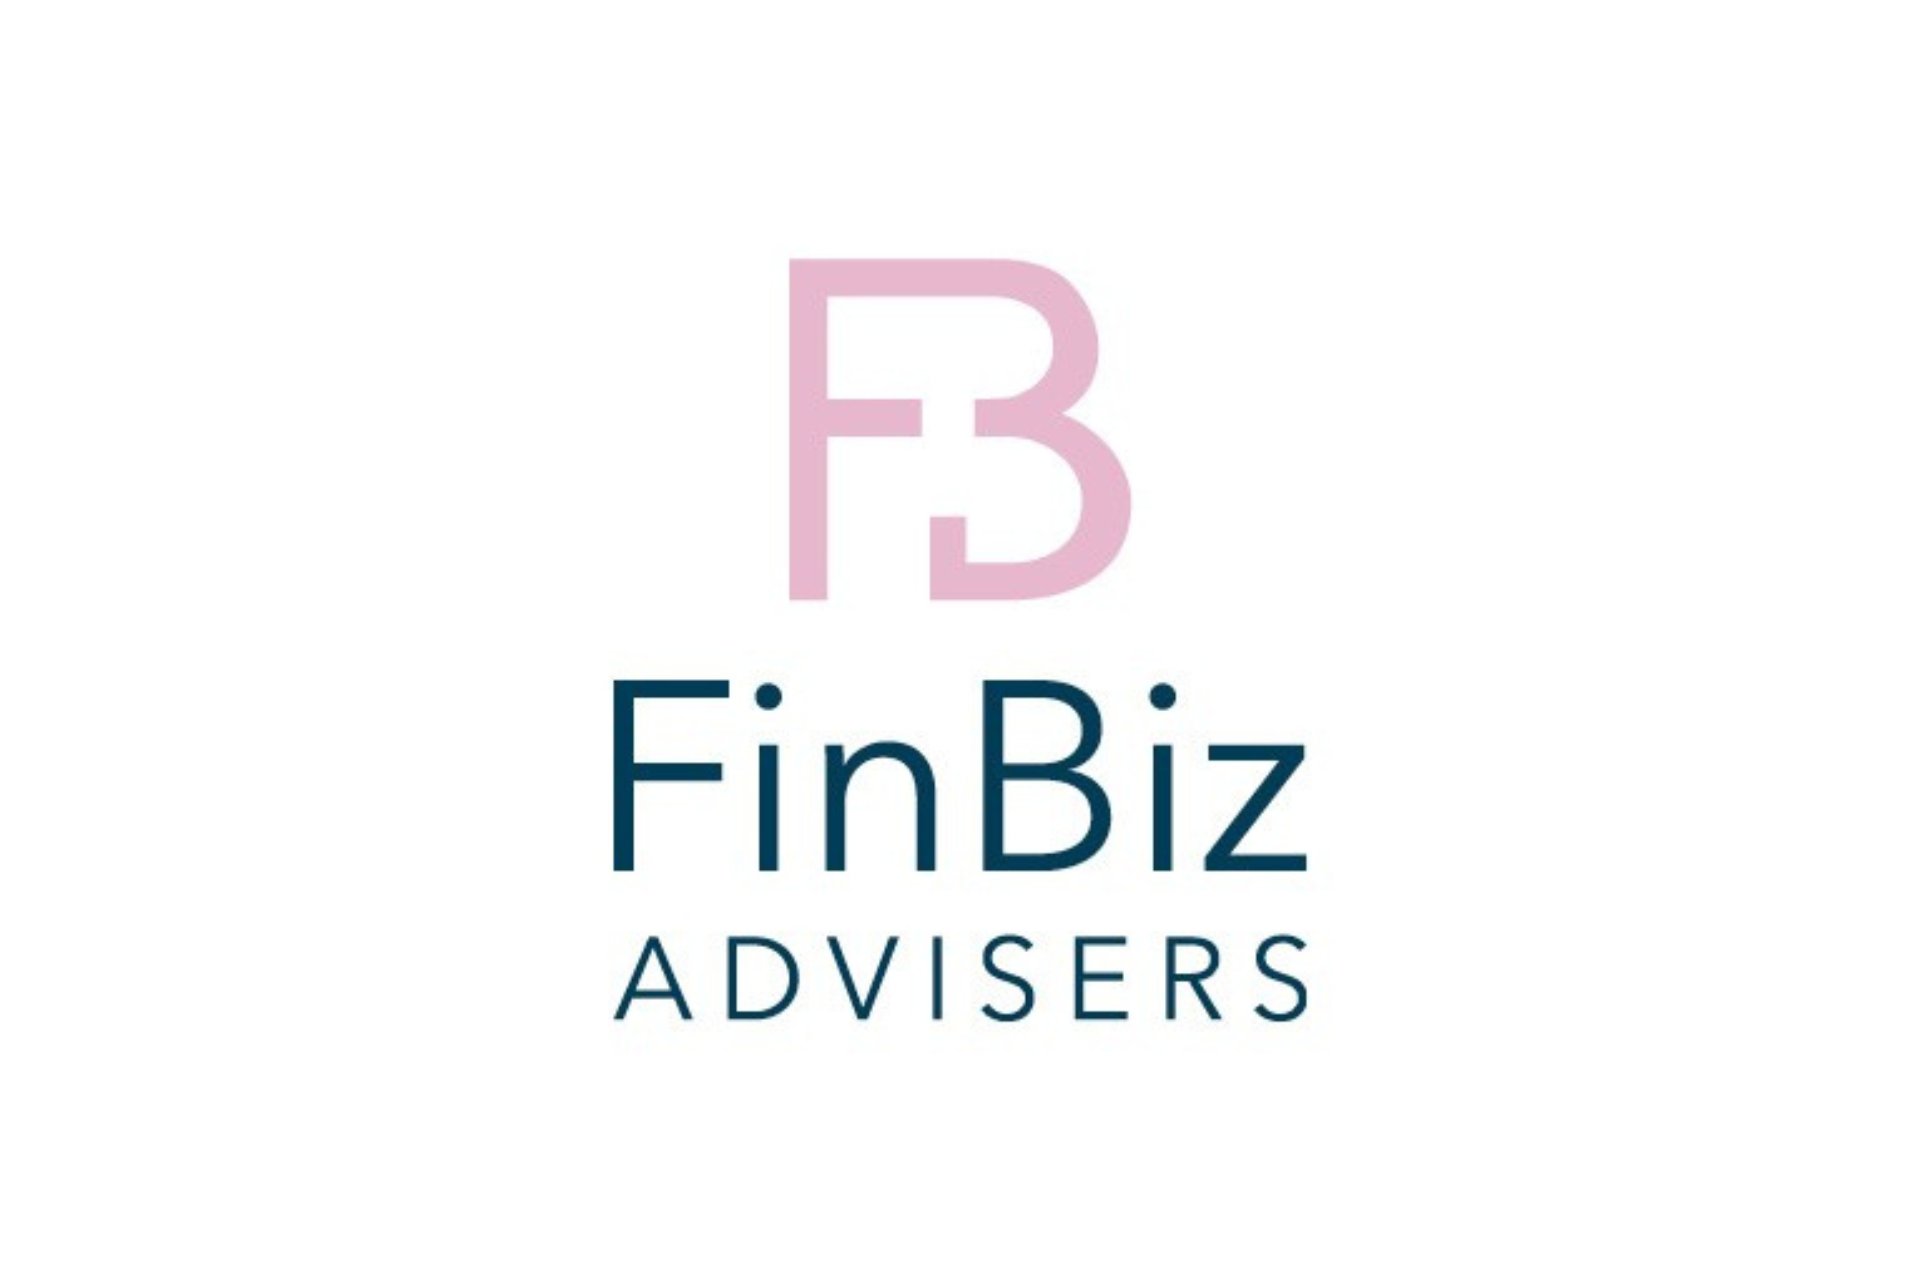 FinBiz Advisers